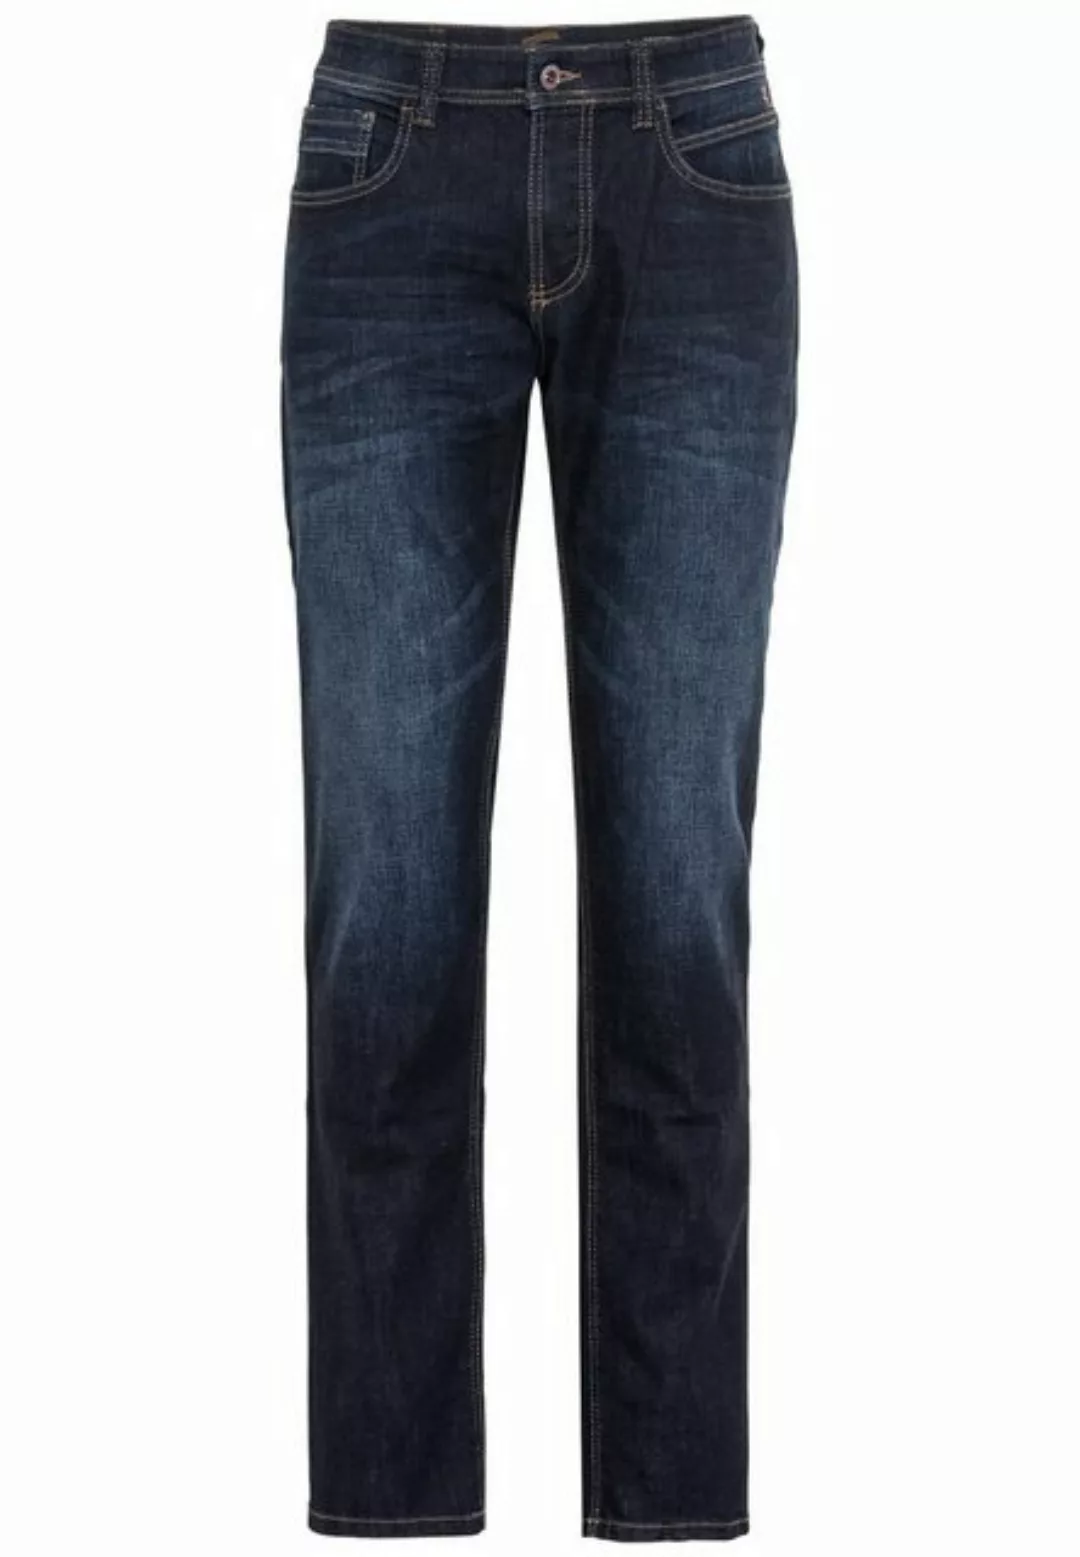 camel active 5-Pocket-Jeans CAMEL ACTIVE HOUSTON dark blue 488235 9829.46 günstig online kaufen